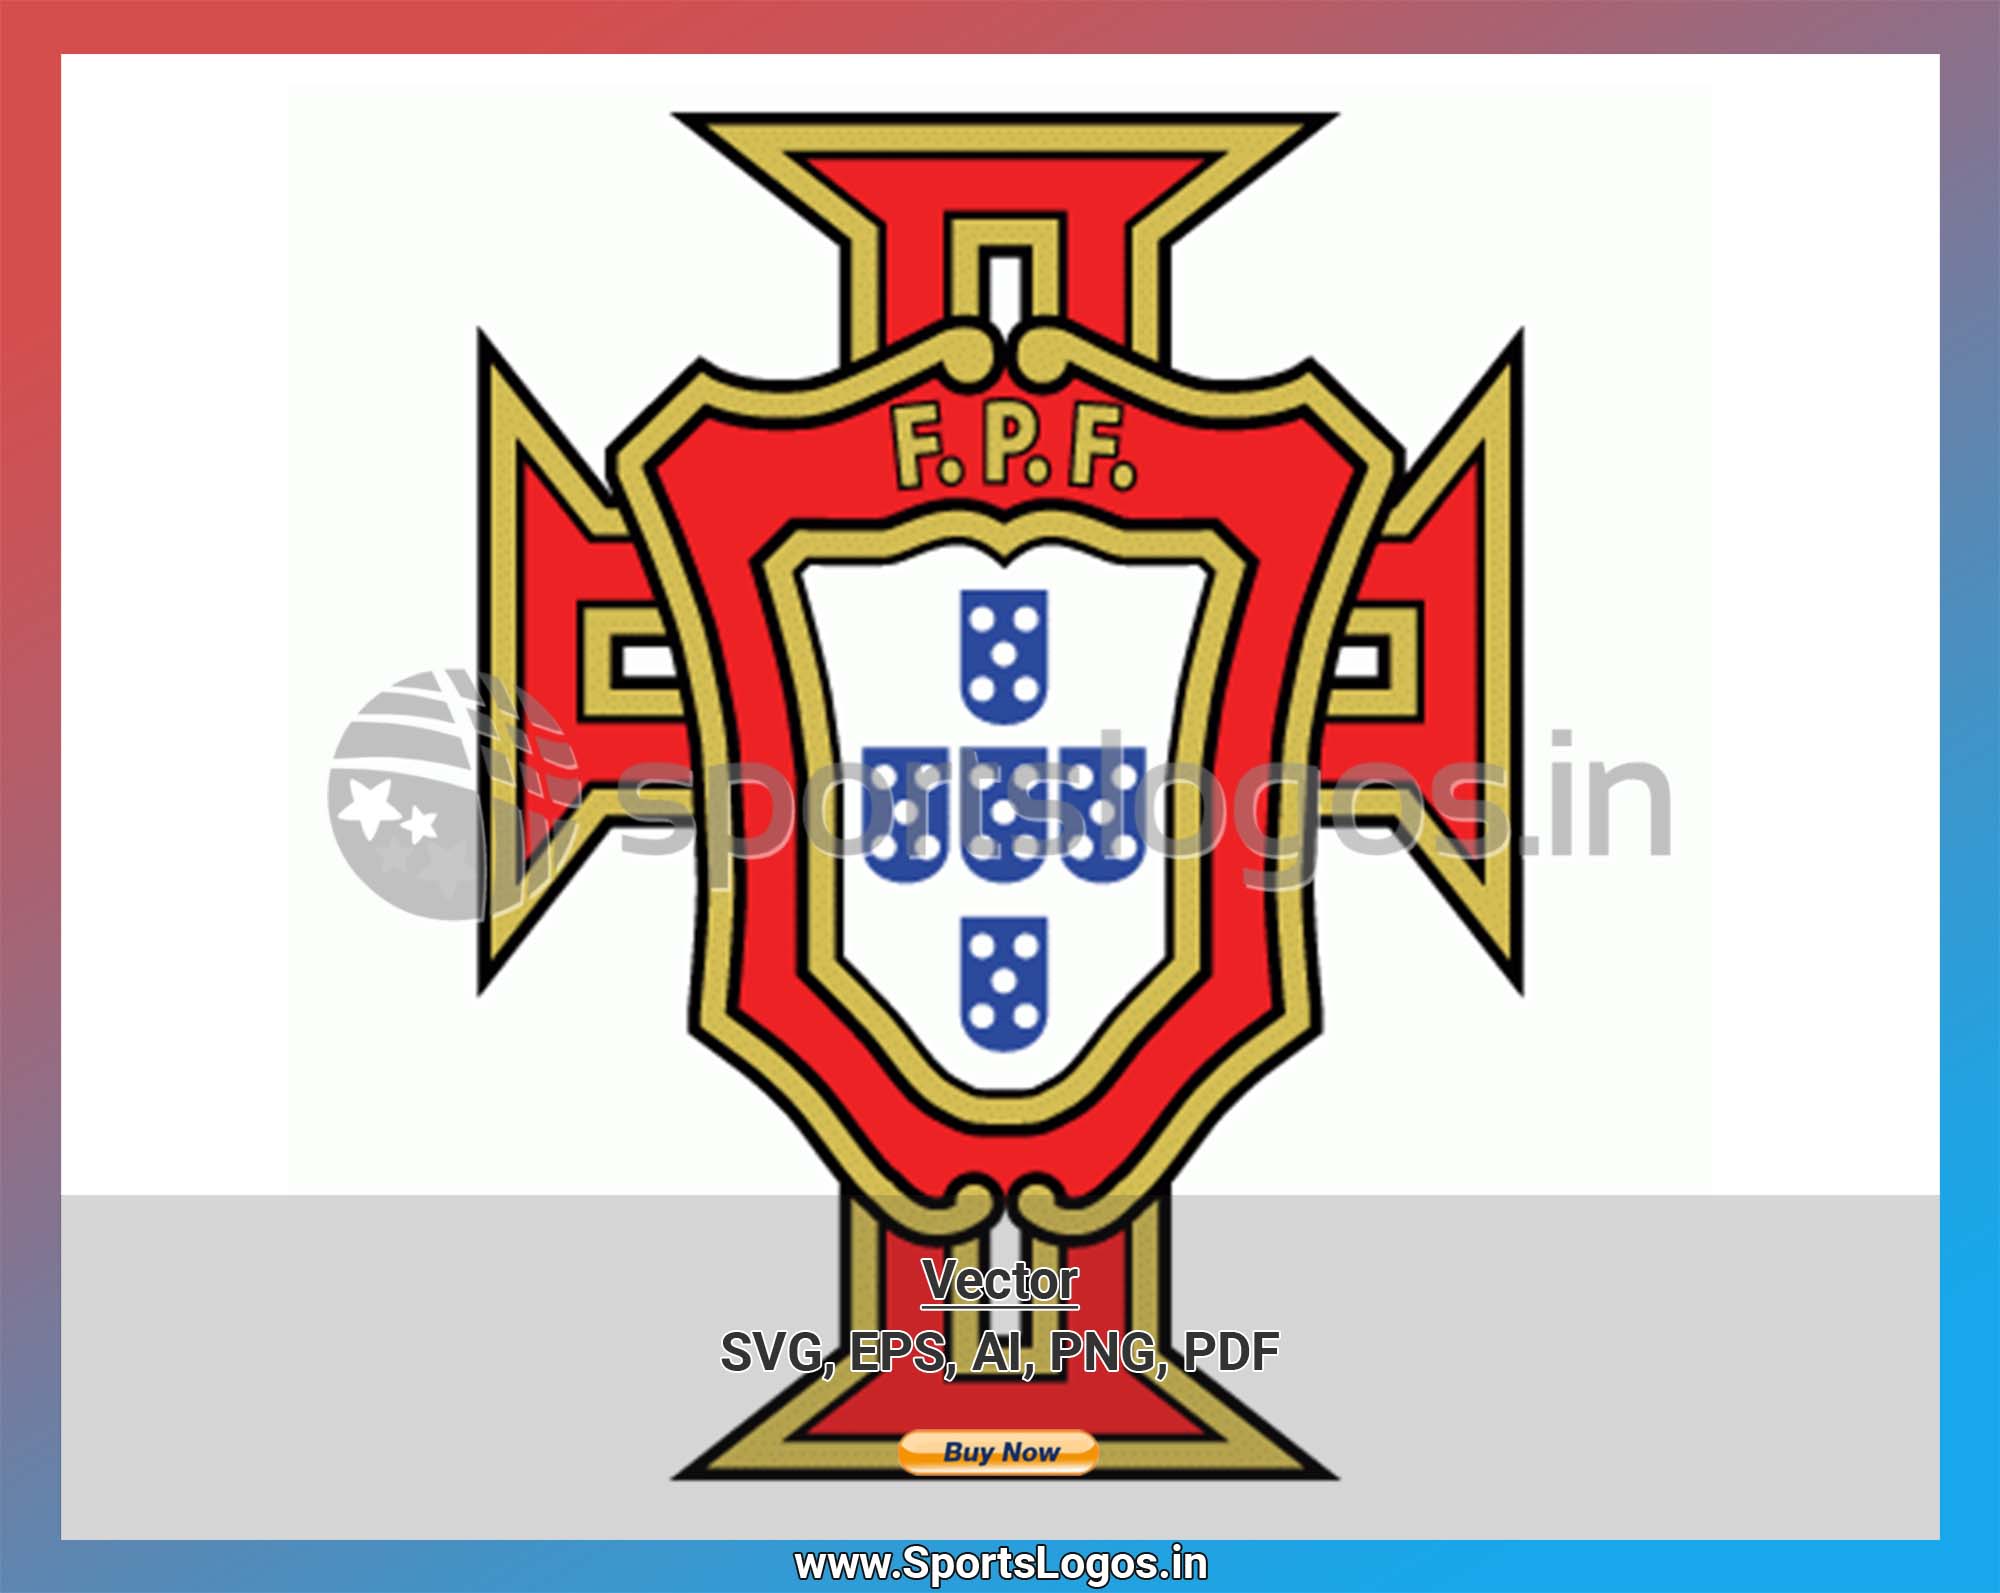 Developing football in Portugal | Inside UEFA | UEFA.com